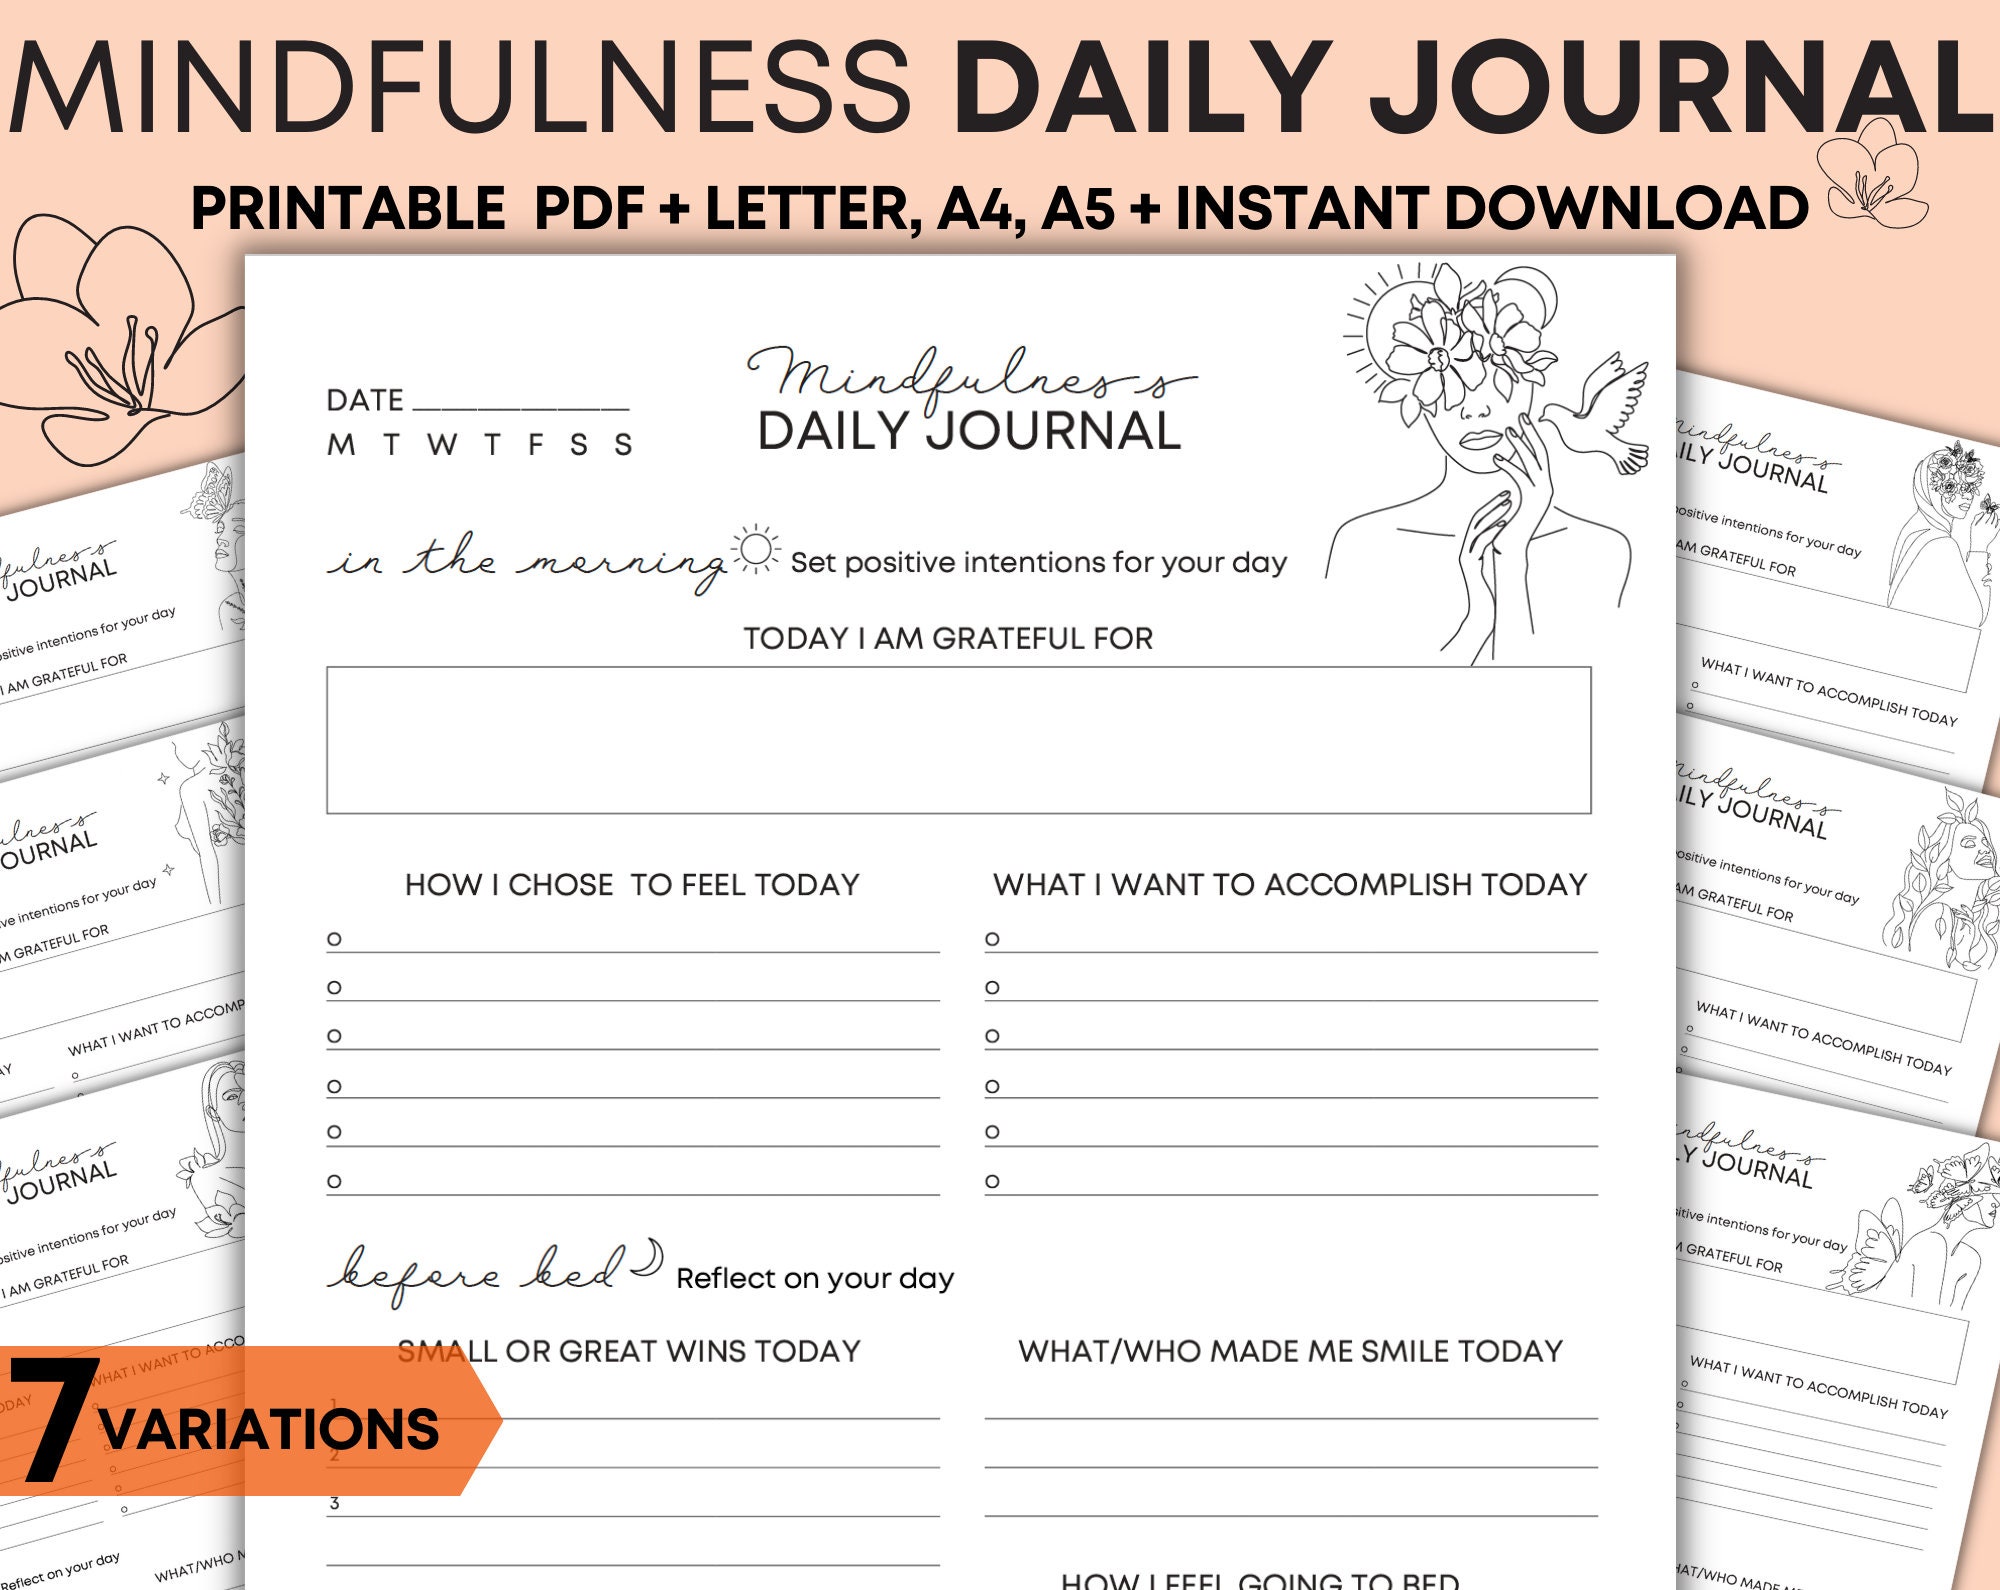 Daily Gratitude Journal - Free Printable — Gathering Beauty